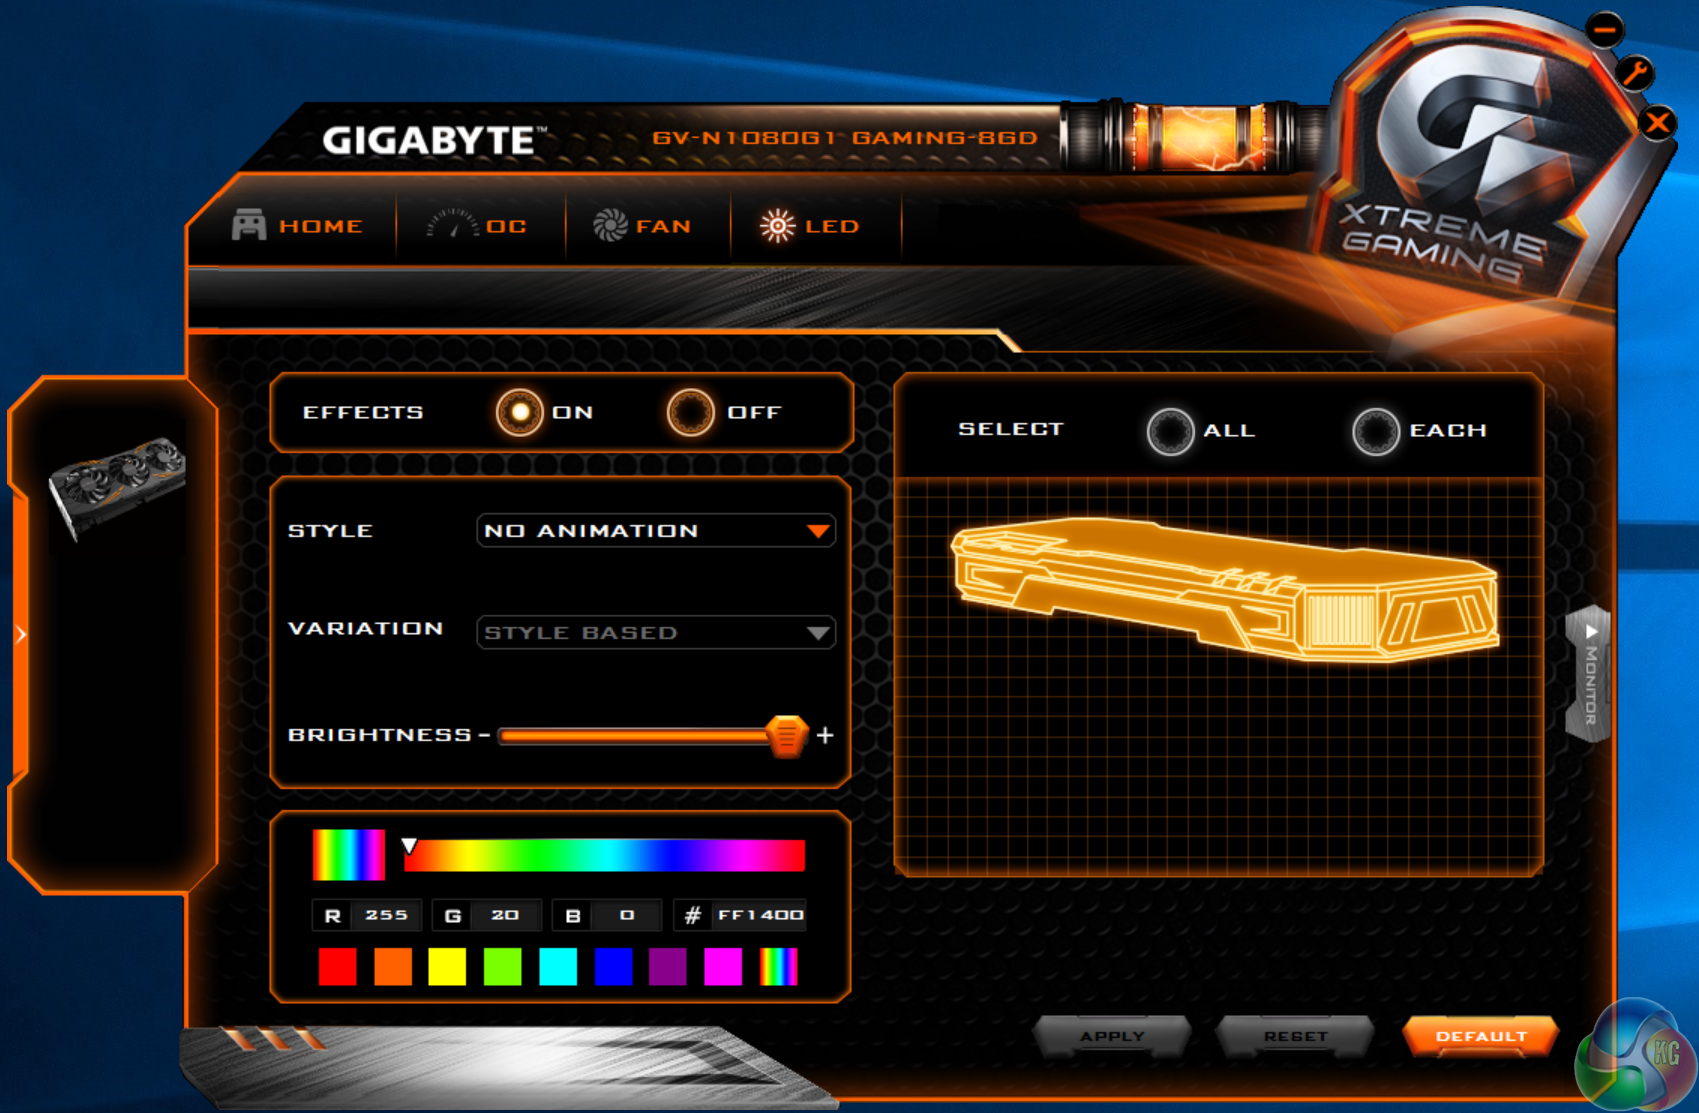 Gigabyte GTX 1080 G1 Gaming RGB Review | KitGuru- Part 2